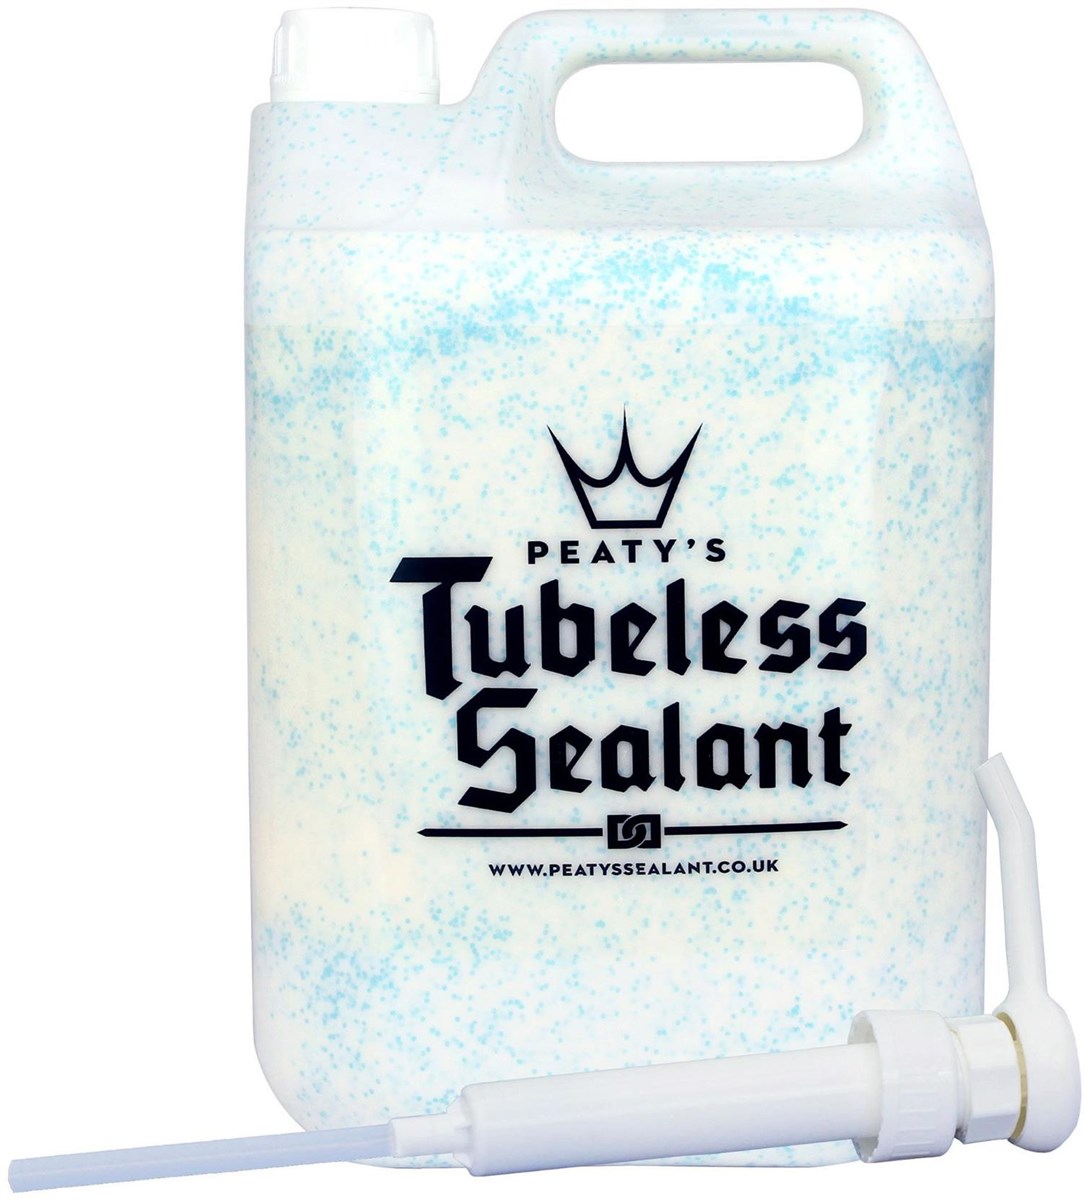 Peatys Tubeless Sealant Workshop Pump Tub Includes Pump product image